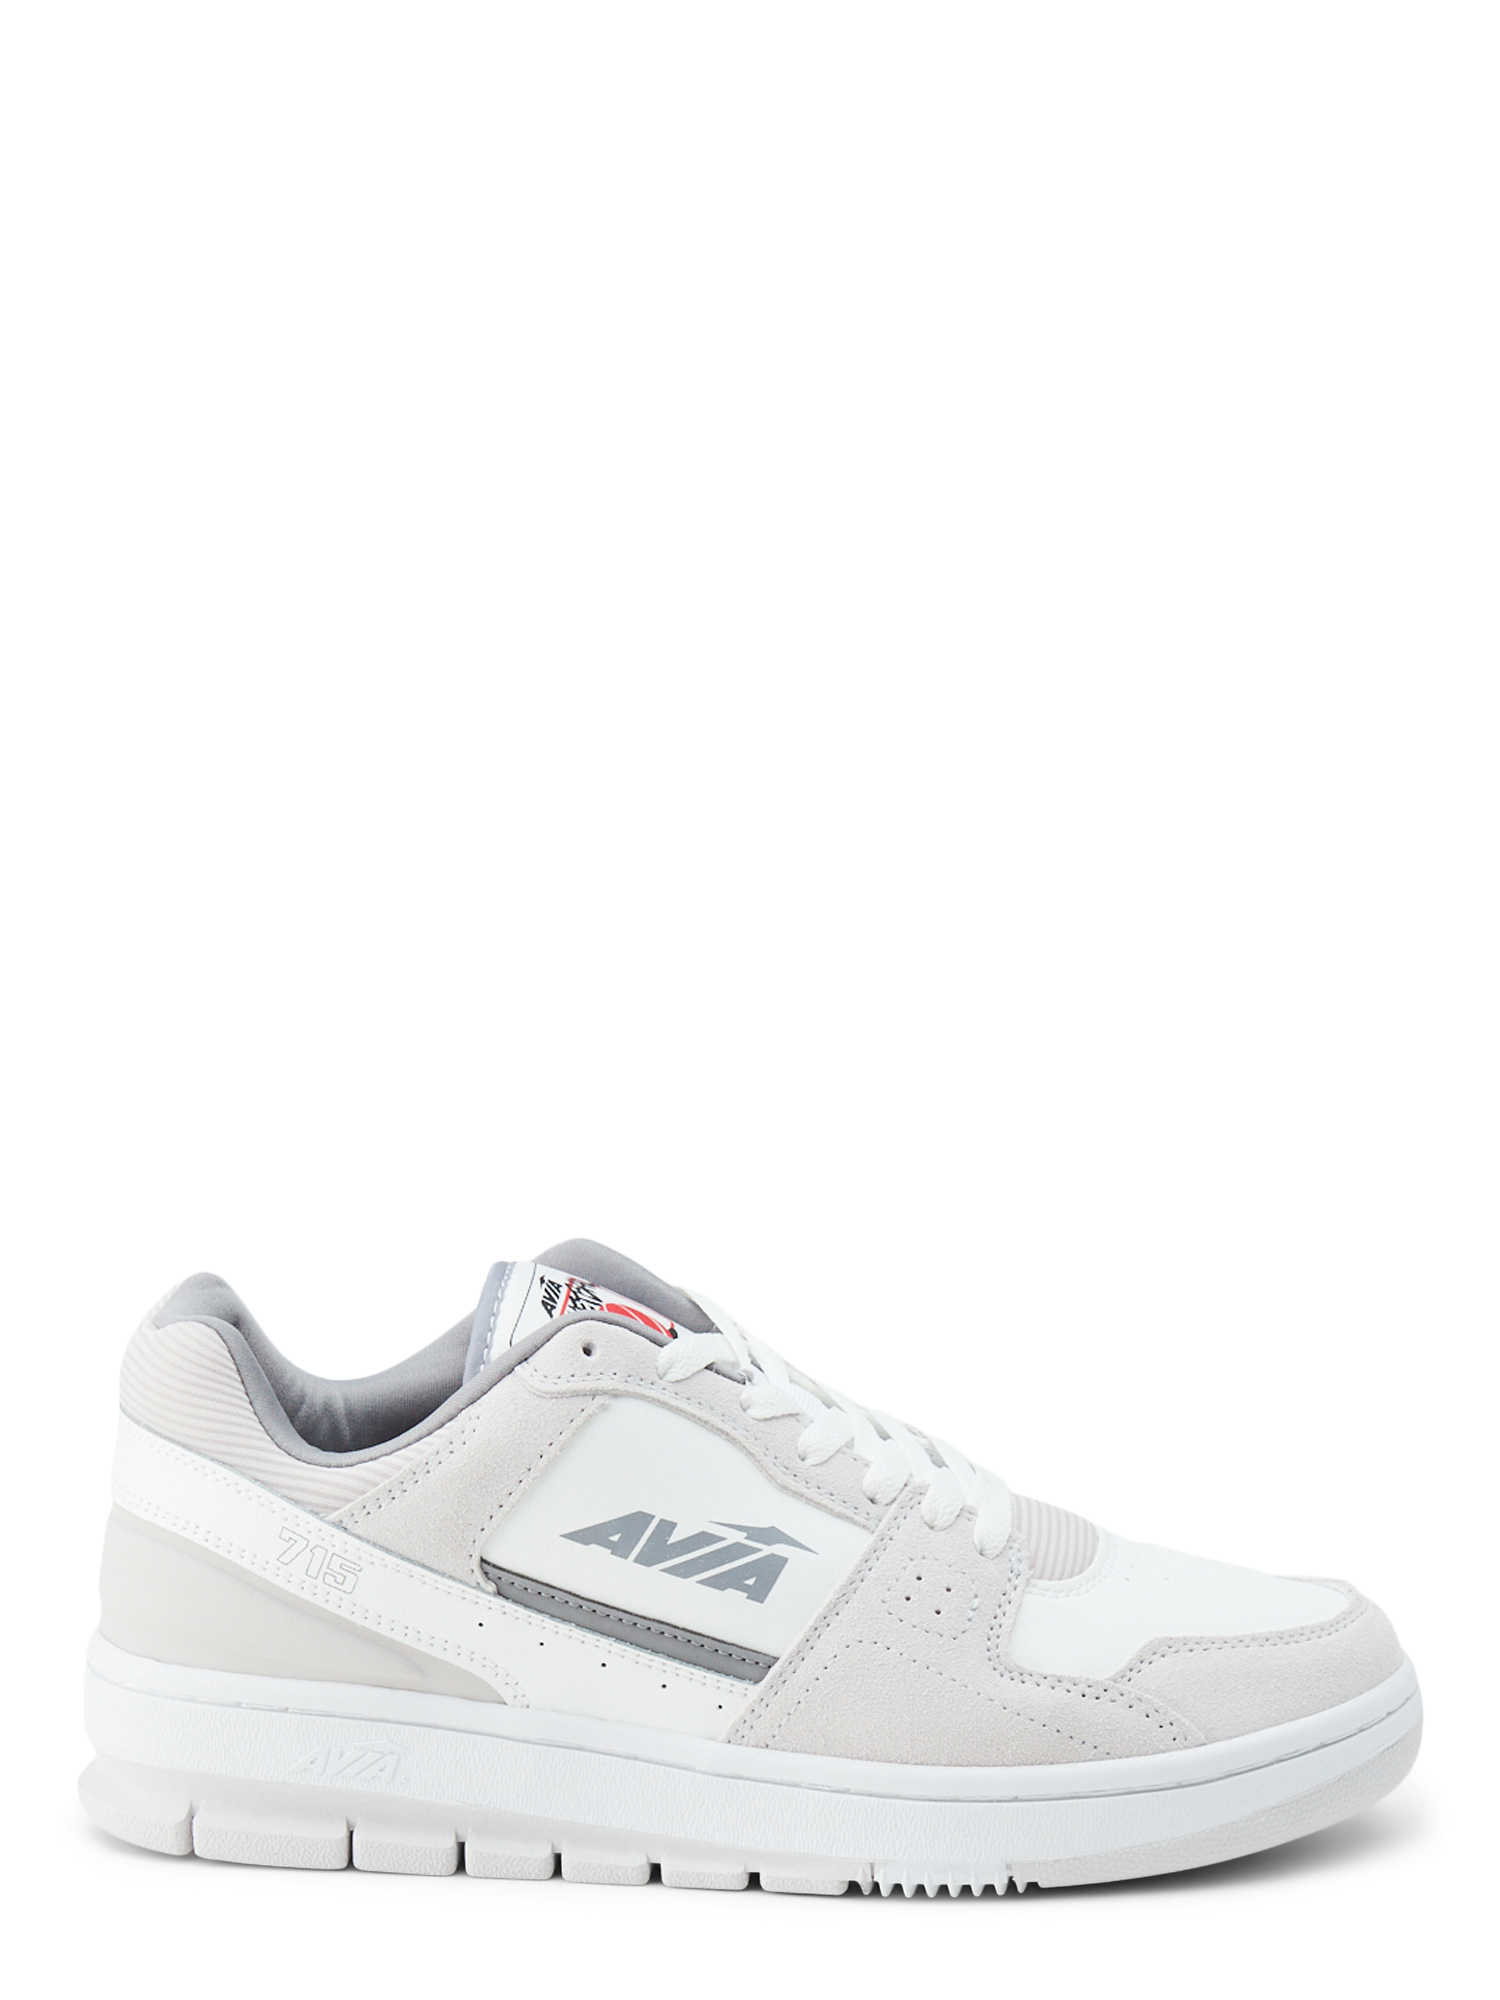 Avia Men’s Retro Athletic Sneakers, Sizes 7-13 - Walmart.com